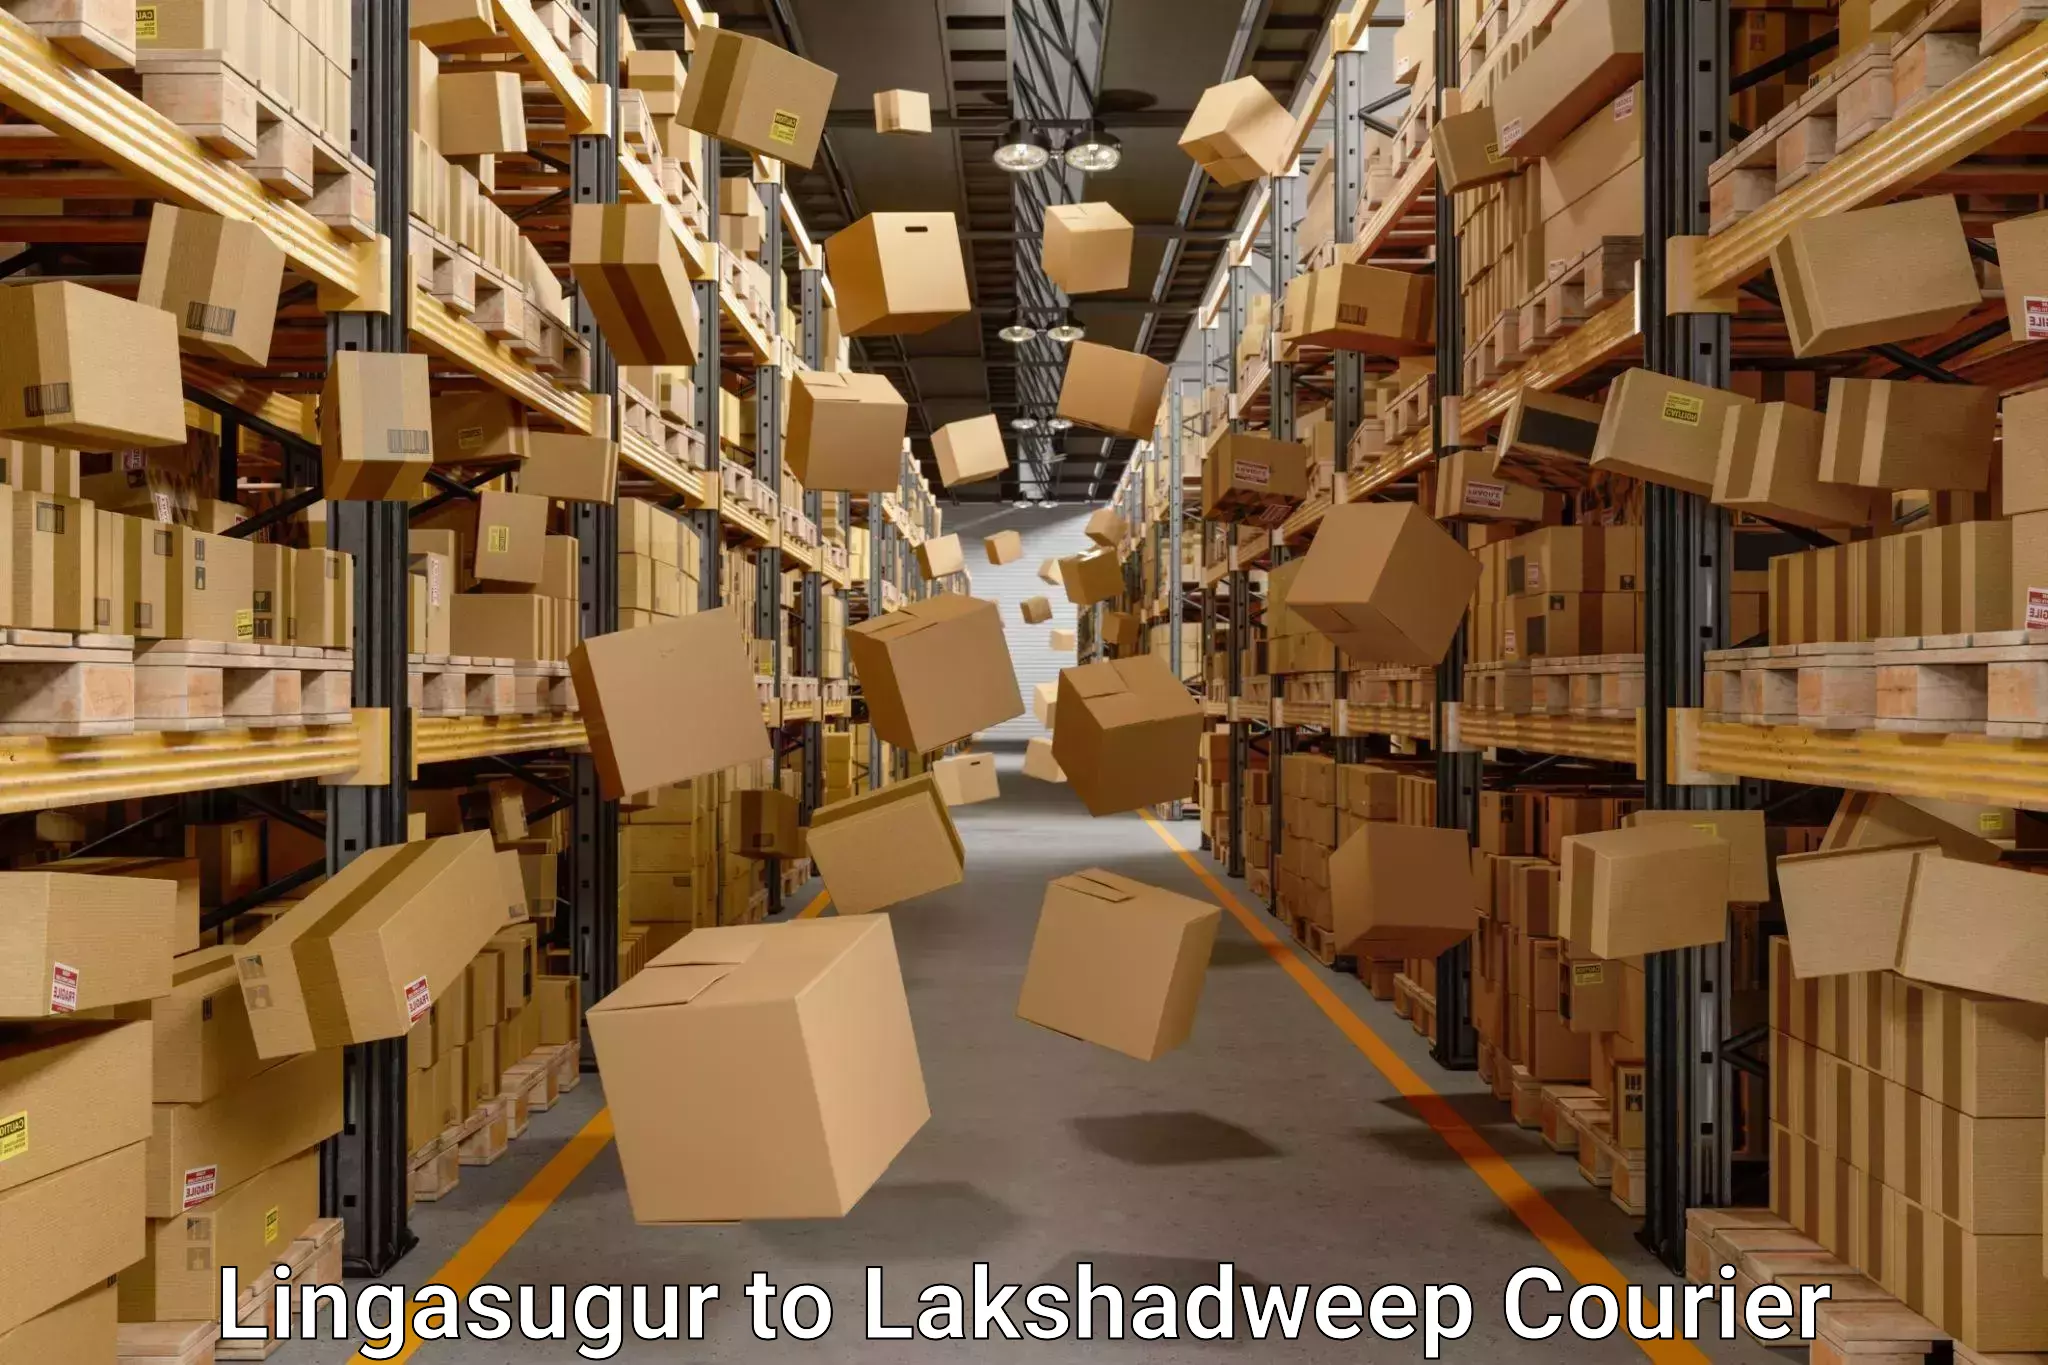 Efficient moving company Lingasugur to Lakshadweep